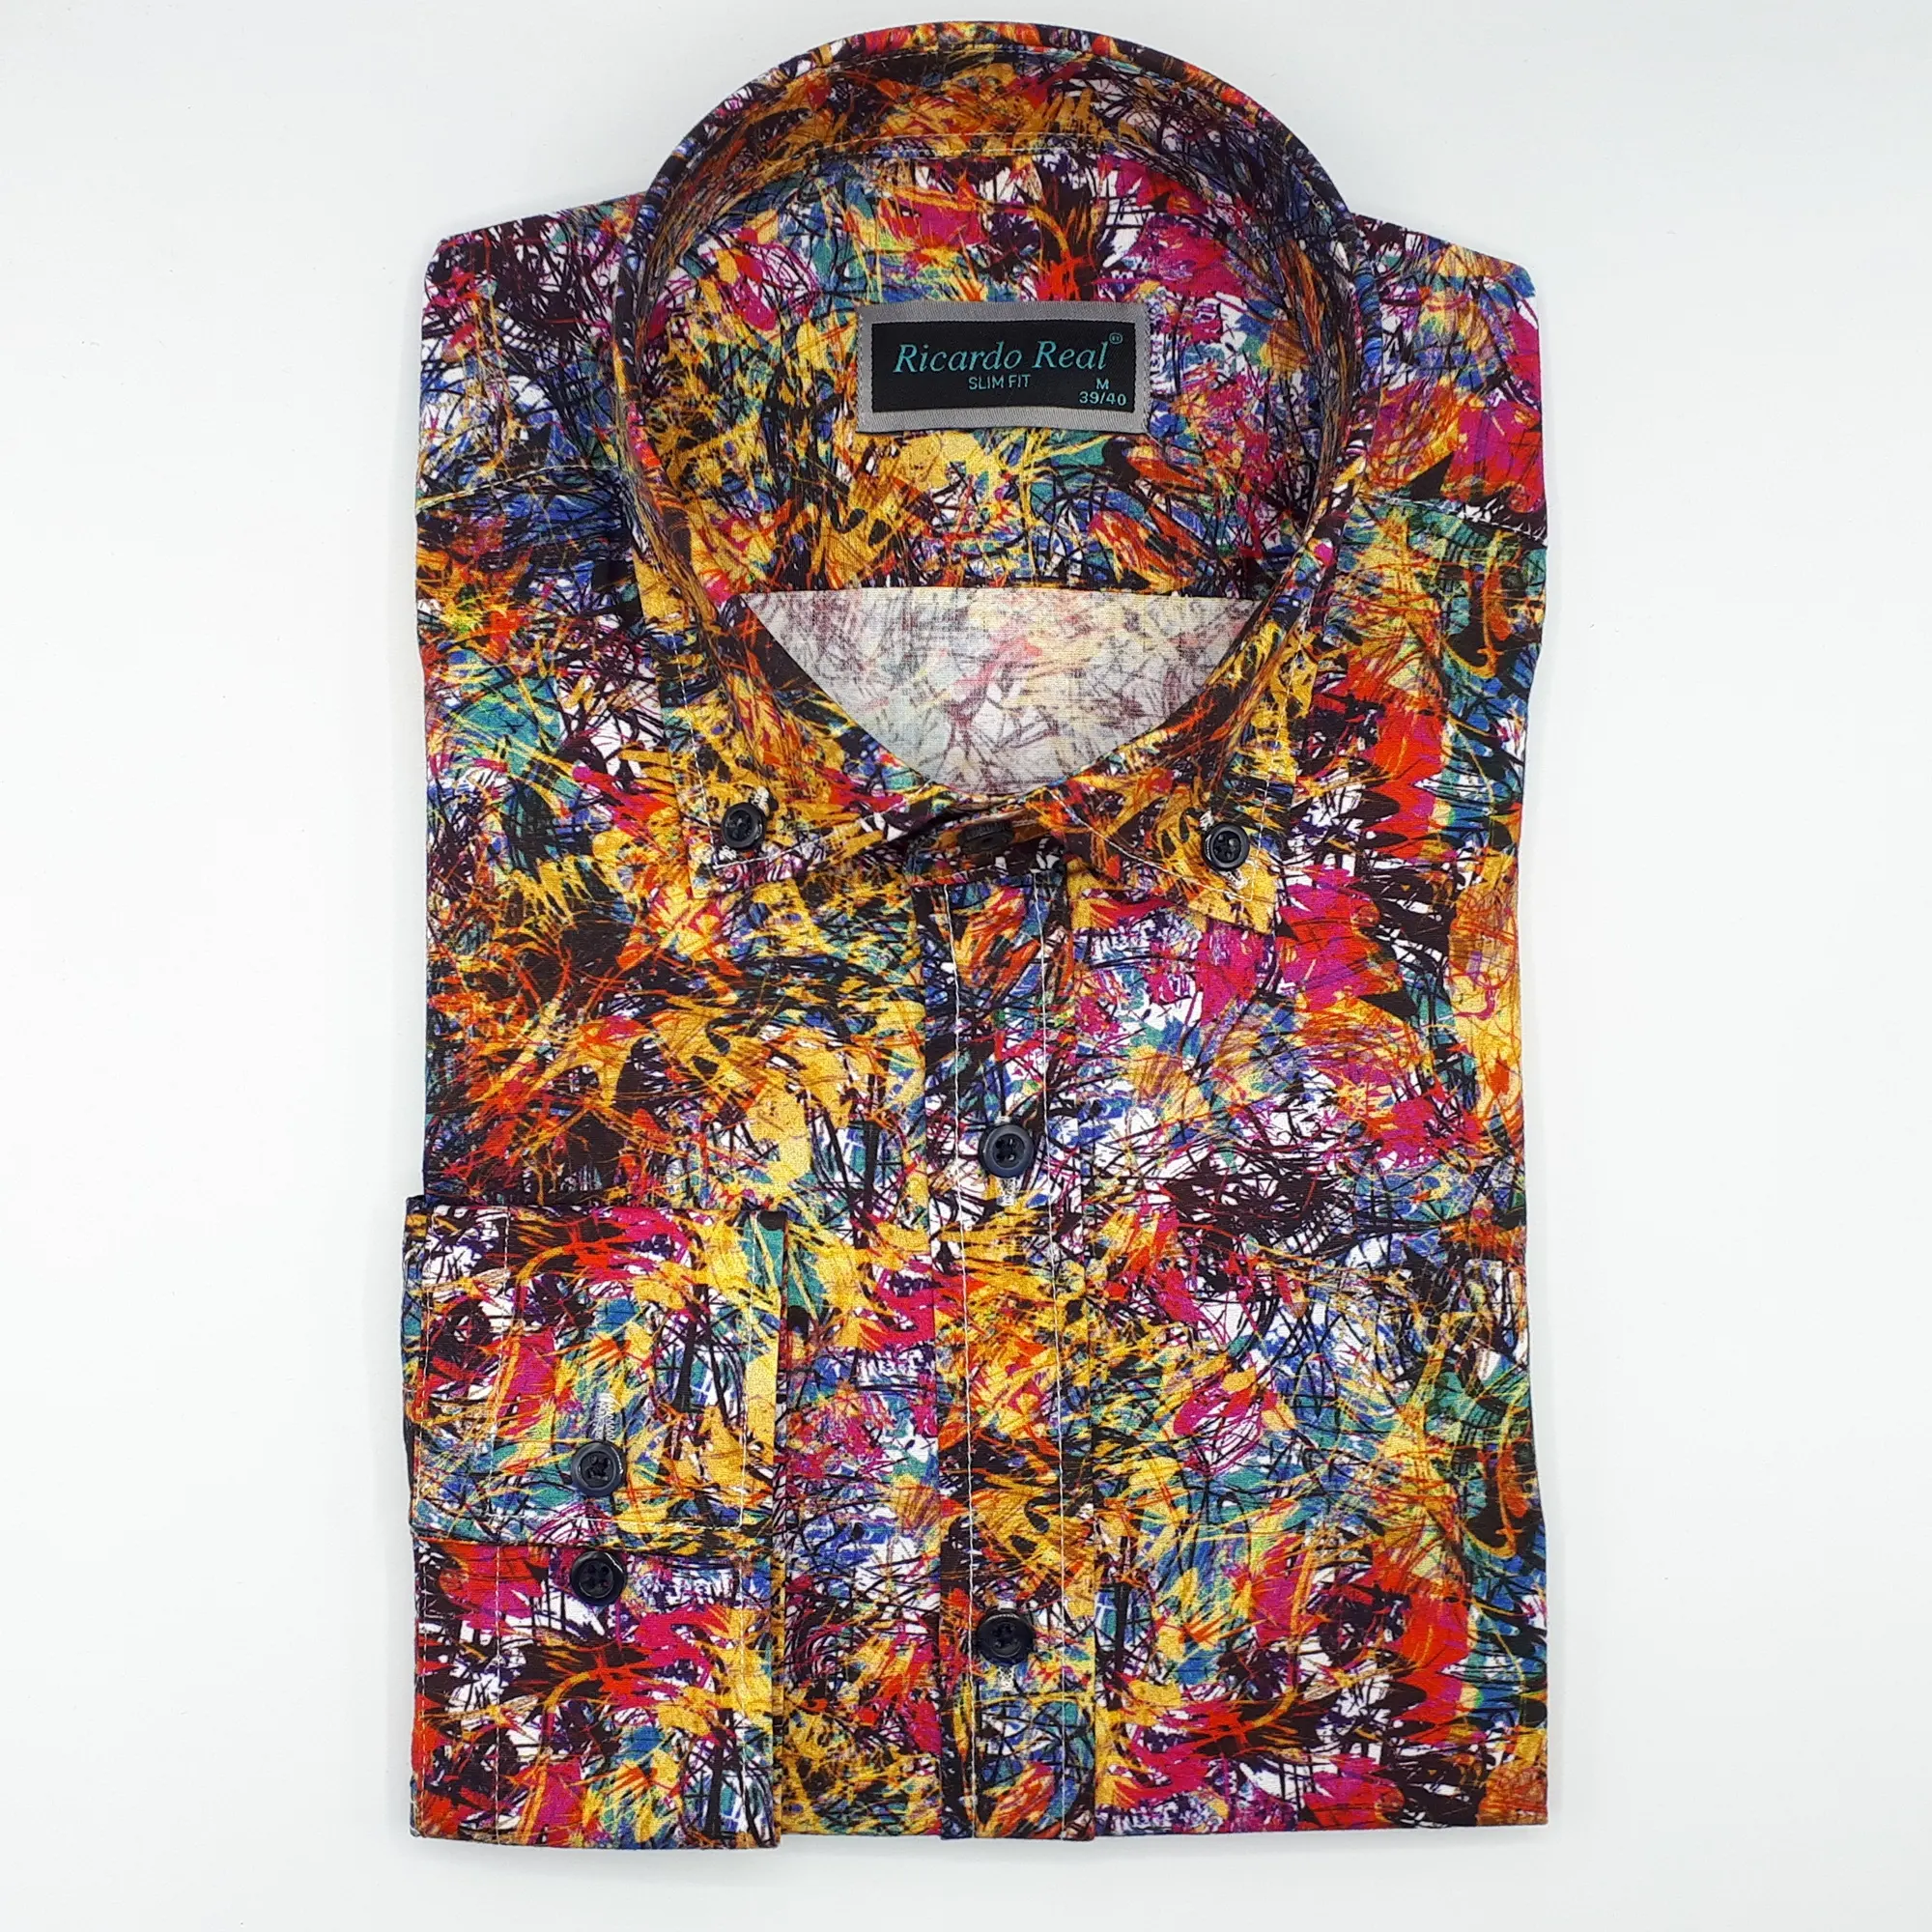 New Season Hot Selling Digital Printed Men's Dress Shirts Long Sleeve made in turkey Cotton product